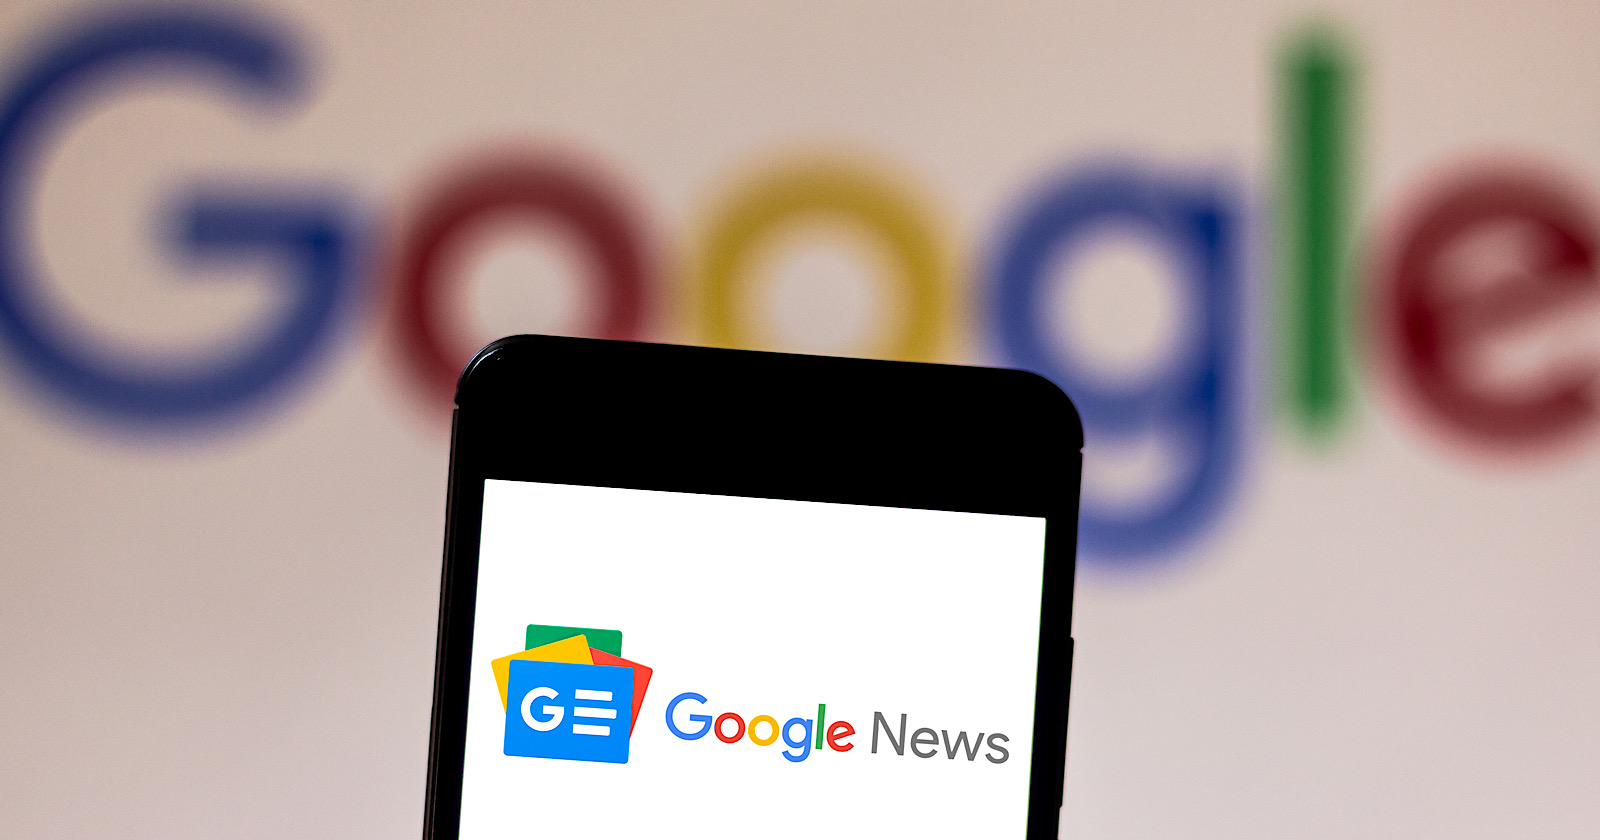 Google News makes "very small" profit in Australia - StreakShot